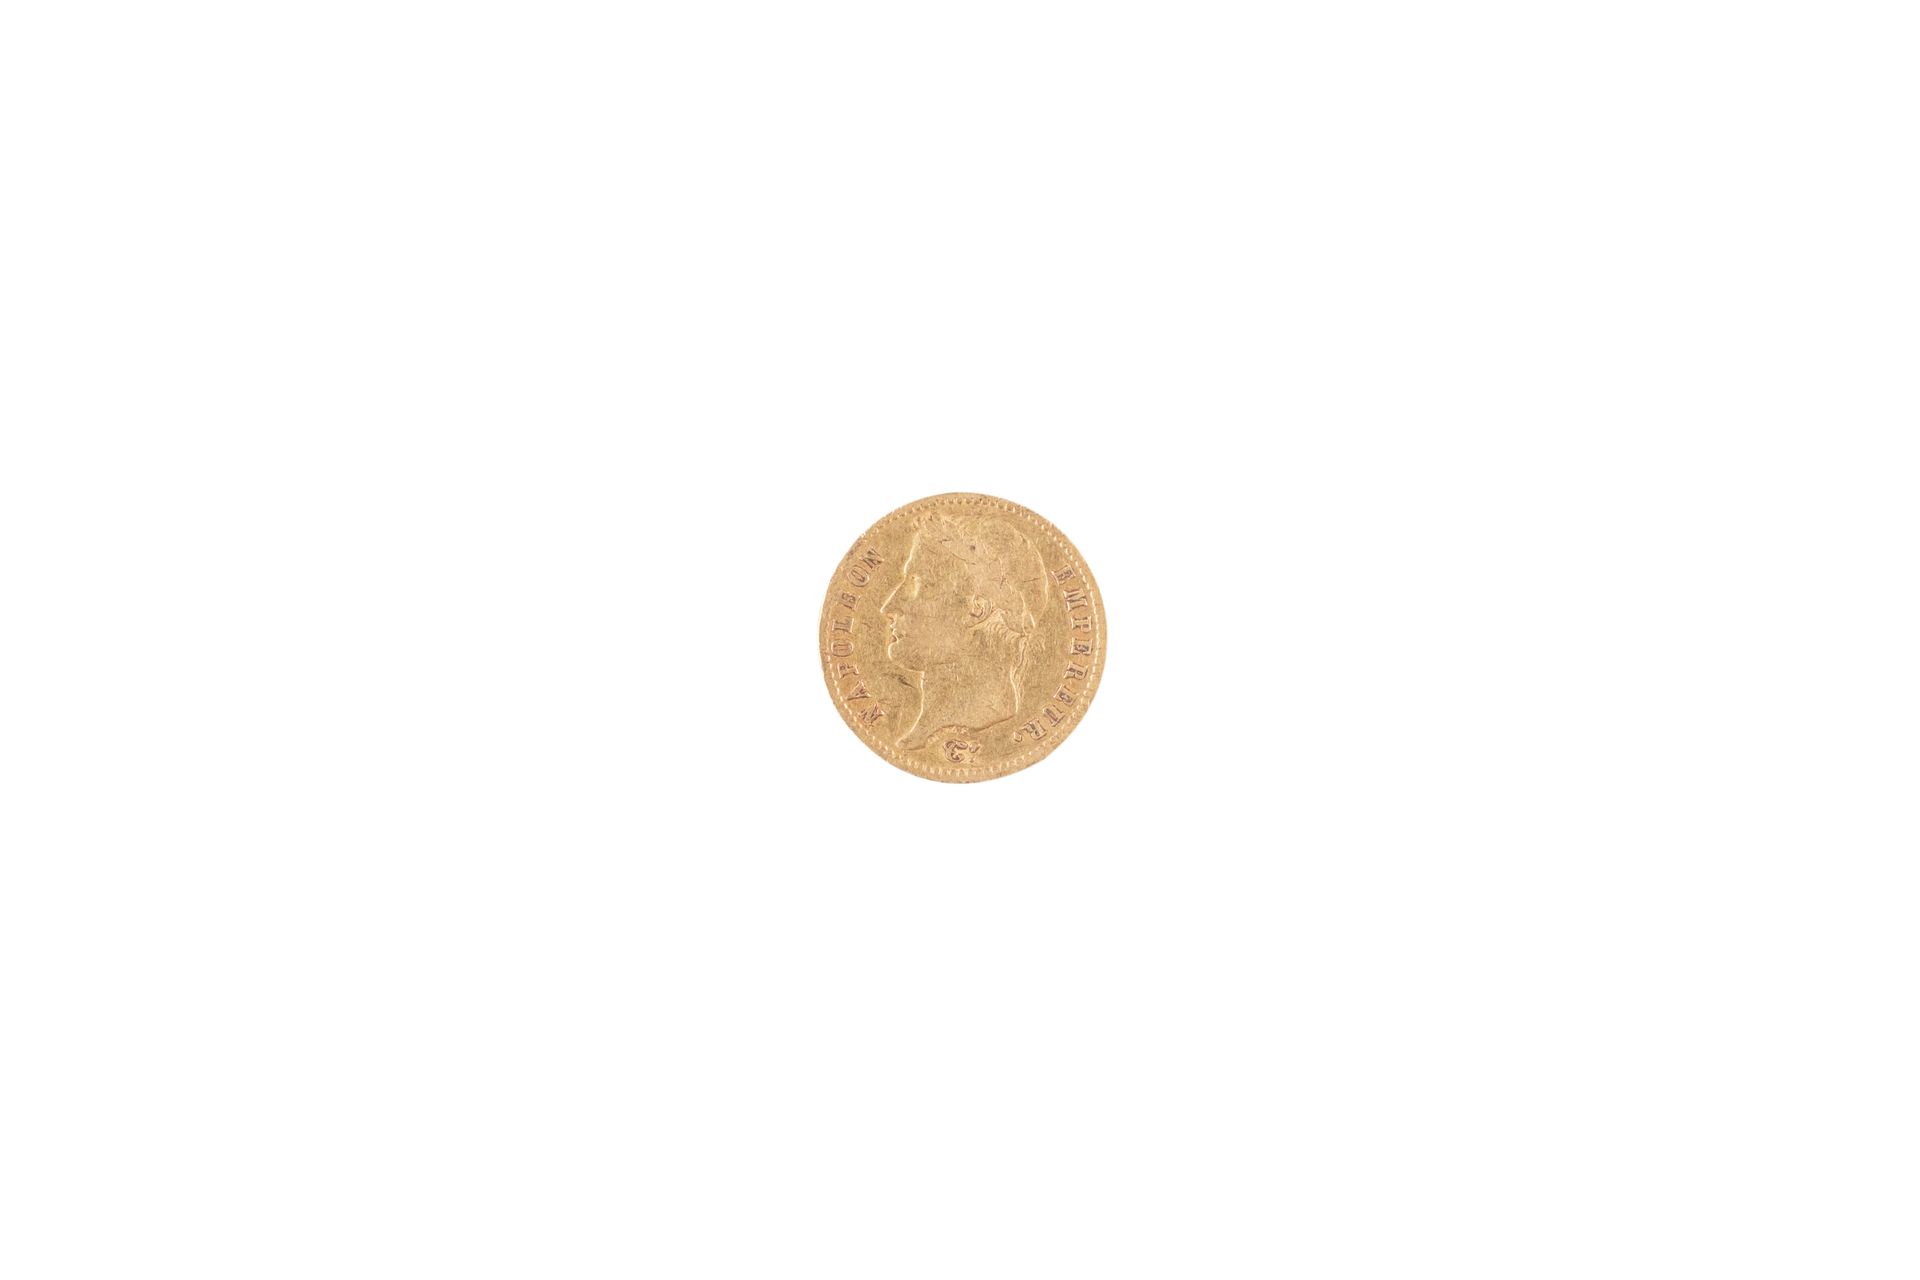 Null 20 francos de oro 1810 A París, 6,38 gr. G. 1025

TTB